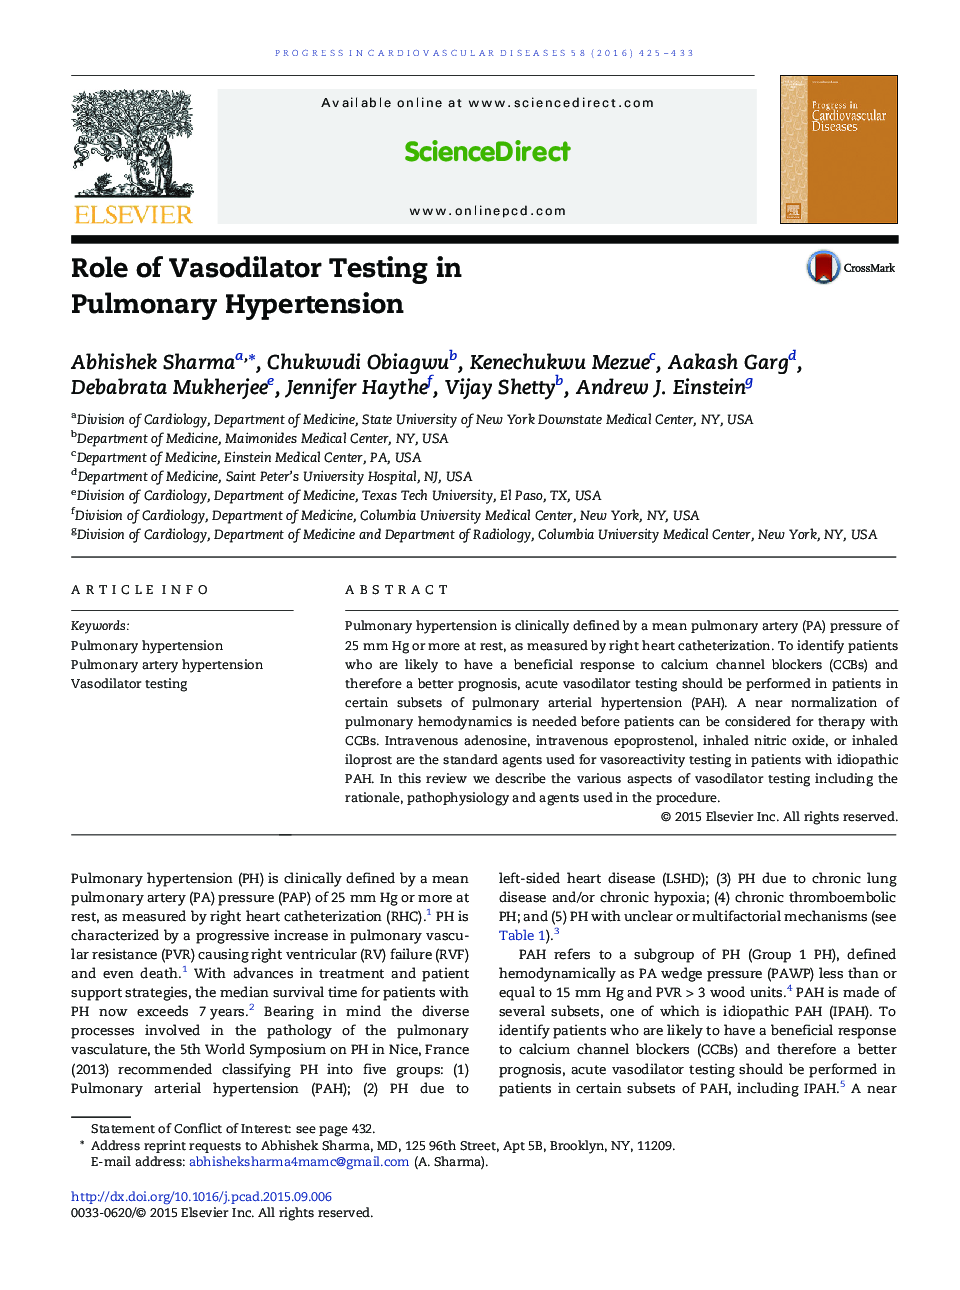 Role of Vasodilator Testing in Pulmonary Hypertension 